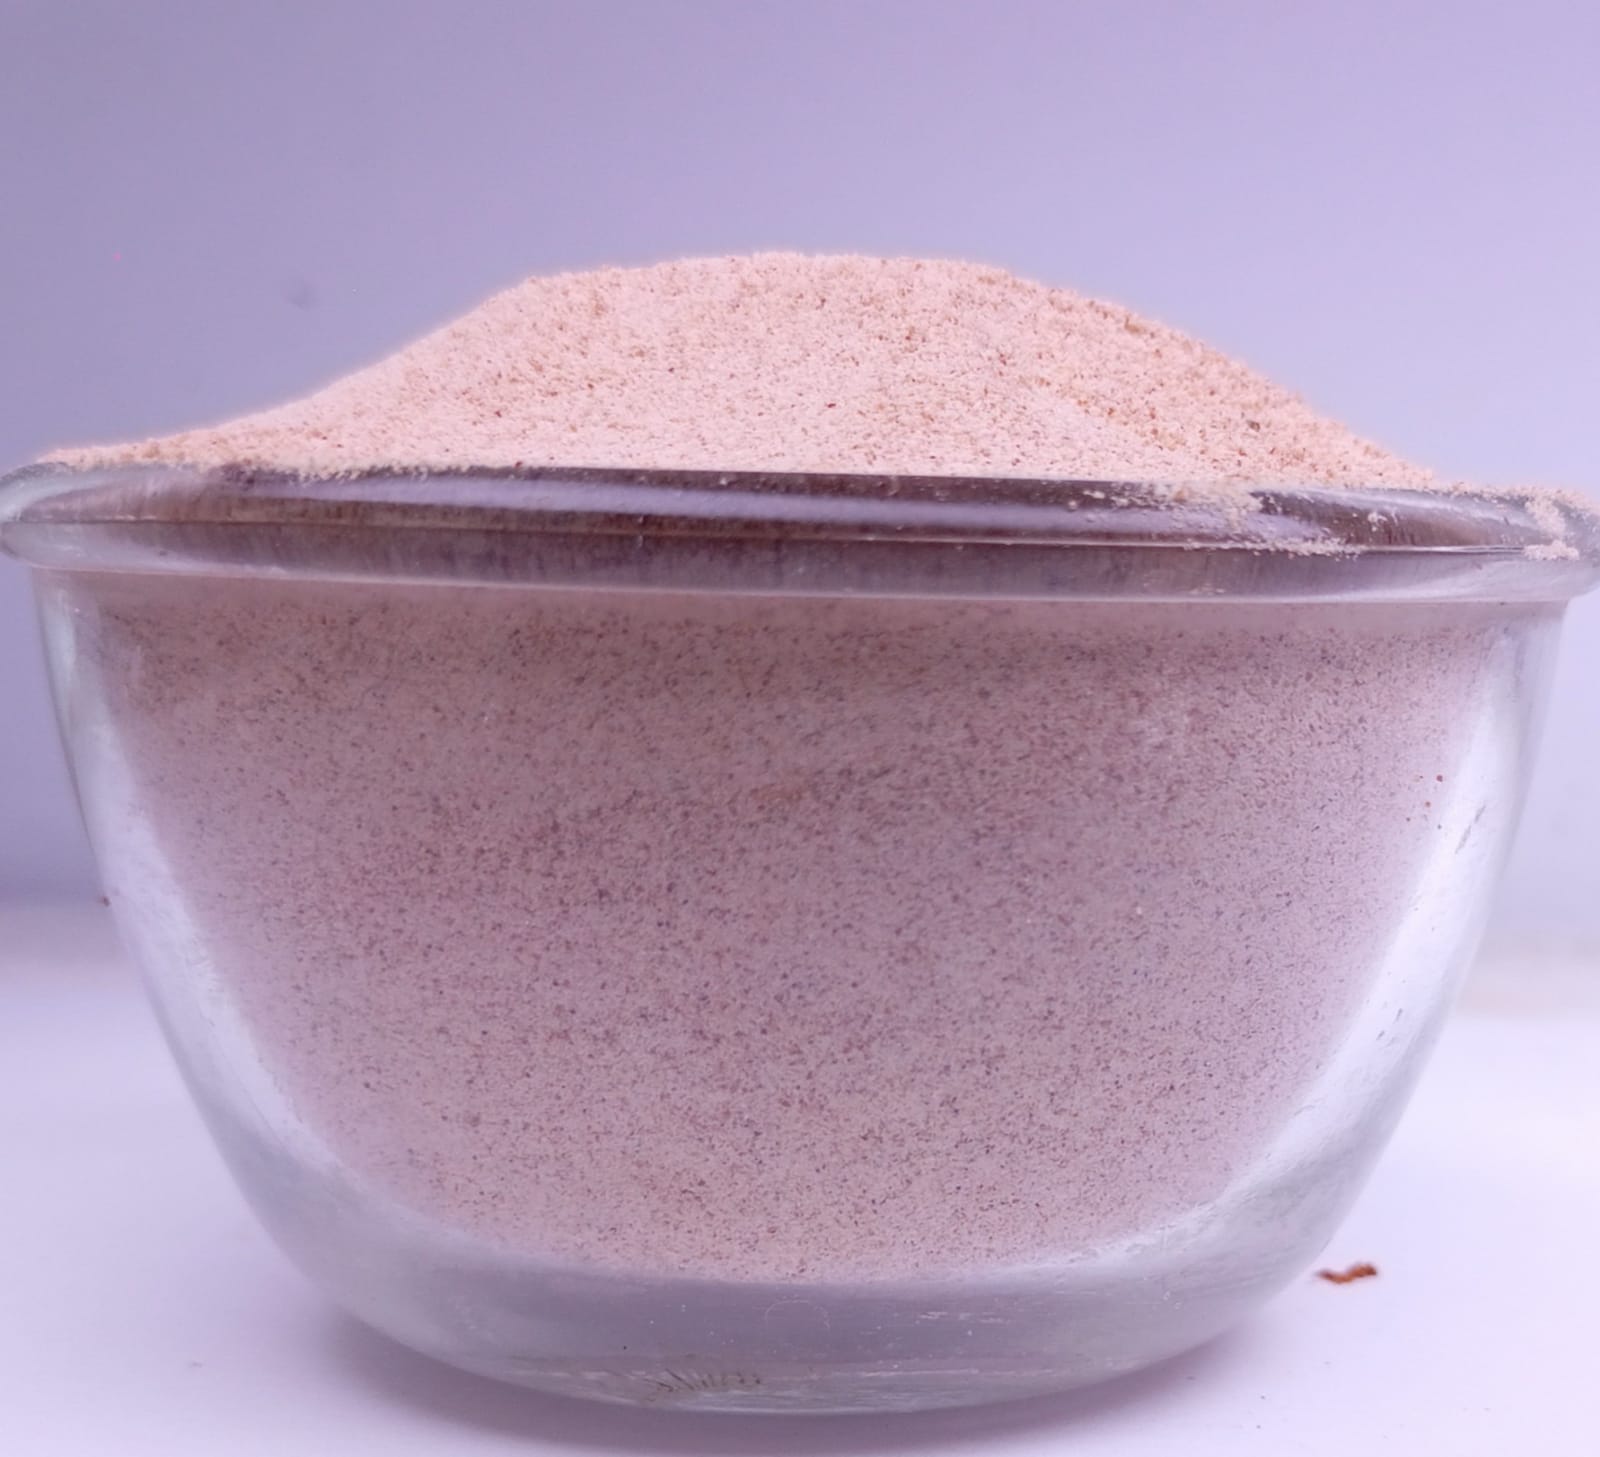 dry-black-dates-powder